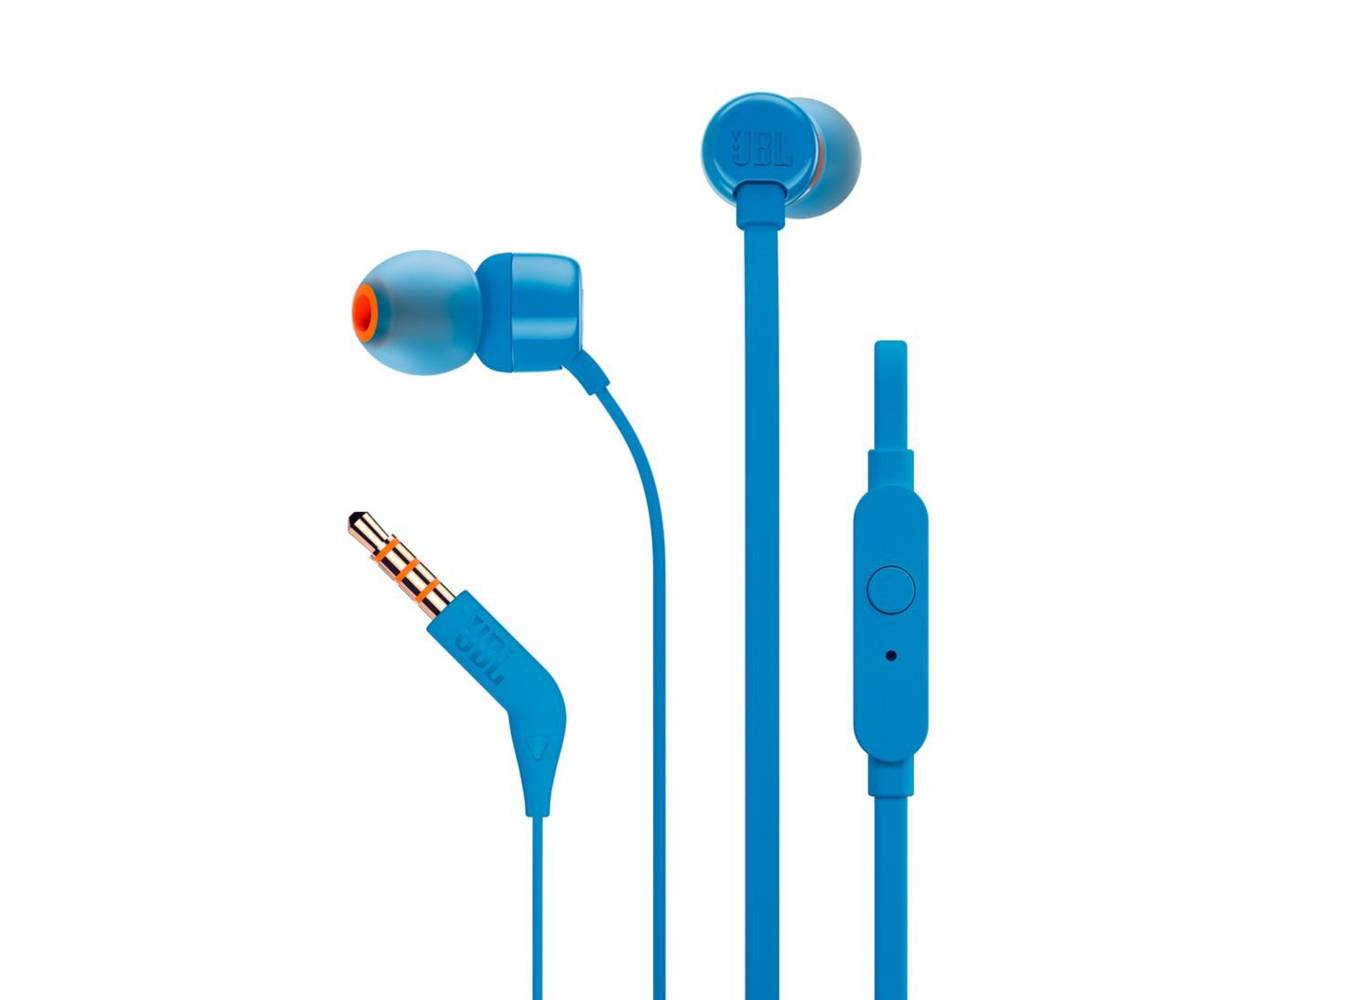 Jbl audífonos tune 110 azul (9 mm)